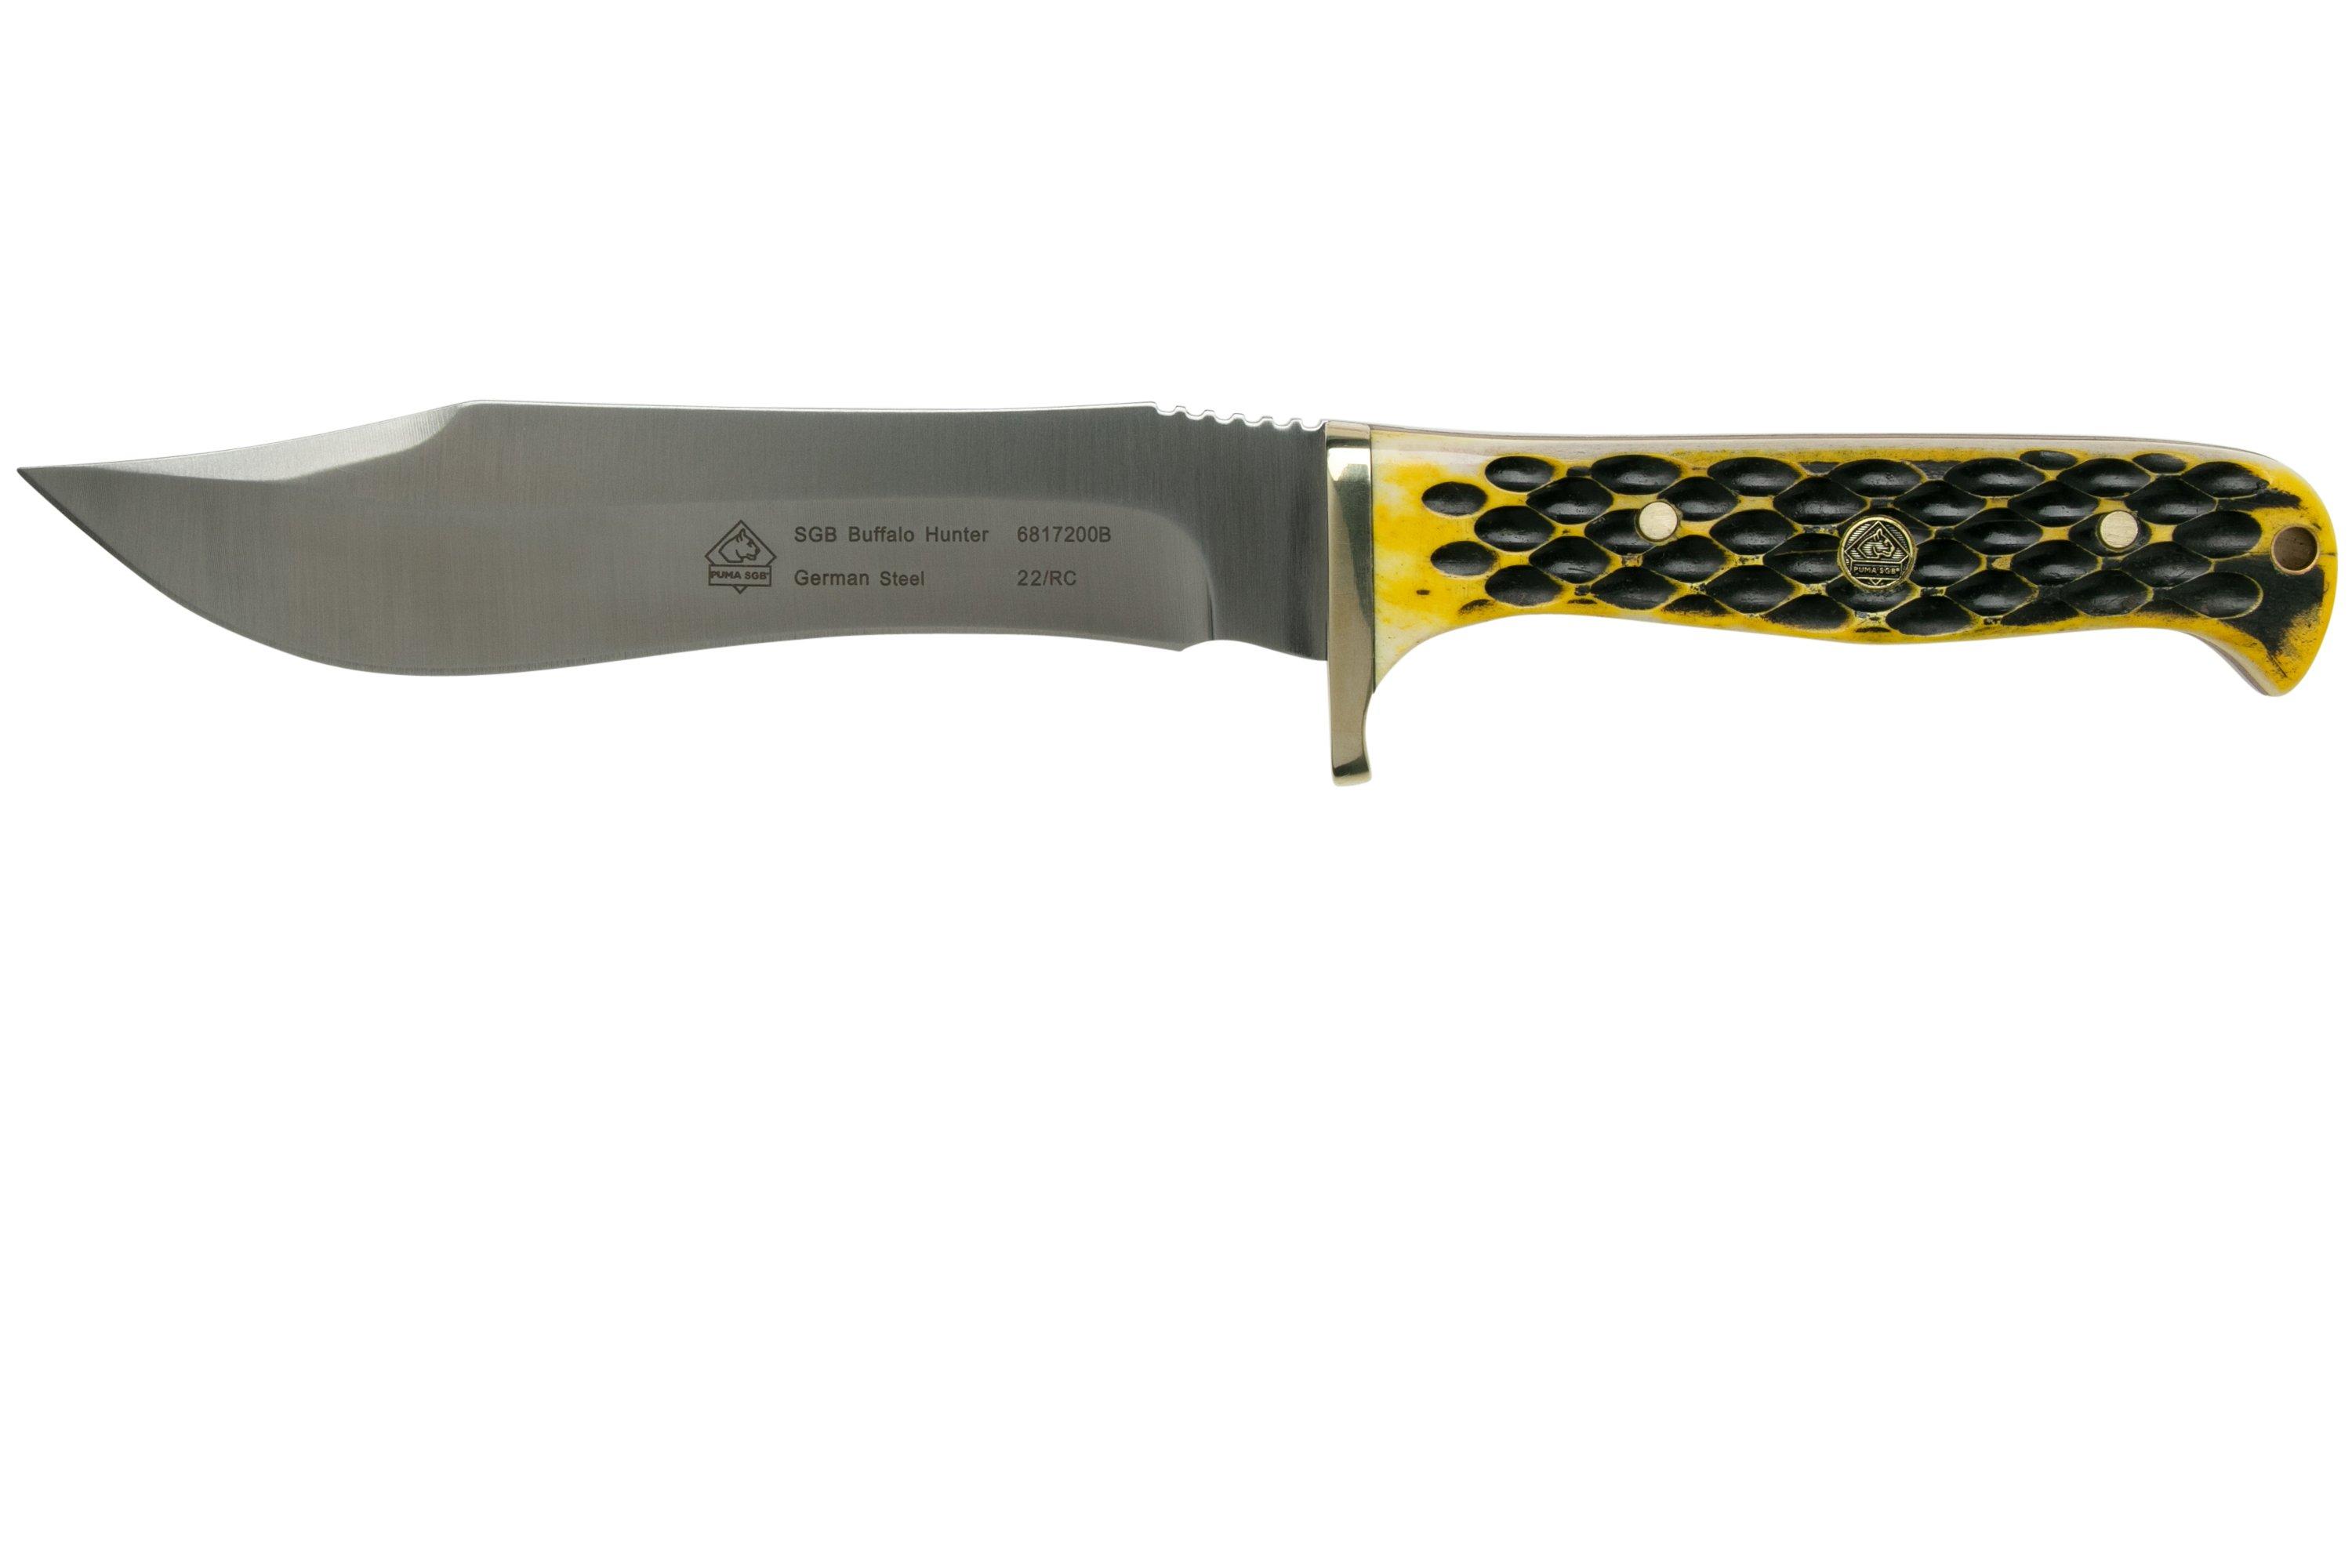 Taiko buik ontwerp Wapenstilstand PUMA SGB Buffalo Hunter, Jigged Bone 6817200B hunting knife |  Advantageously shopping at Knivesandtools.com